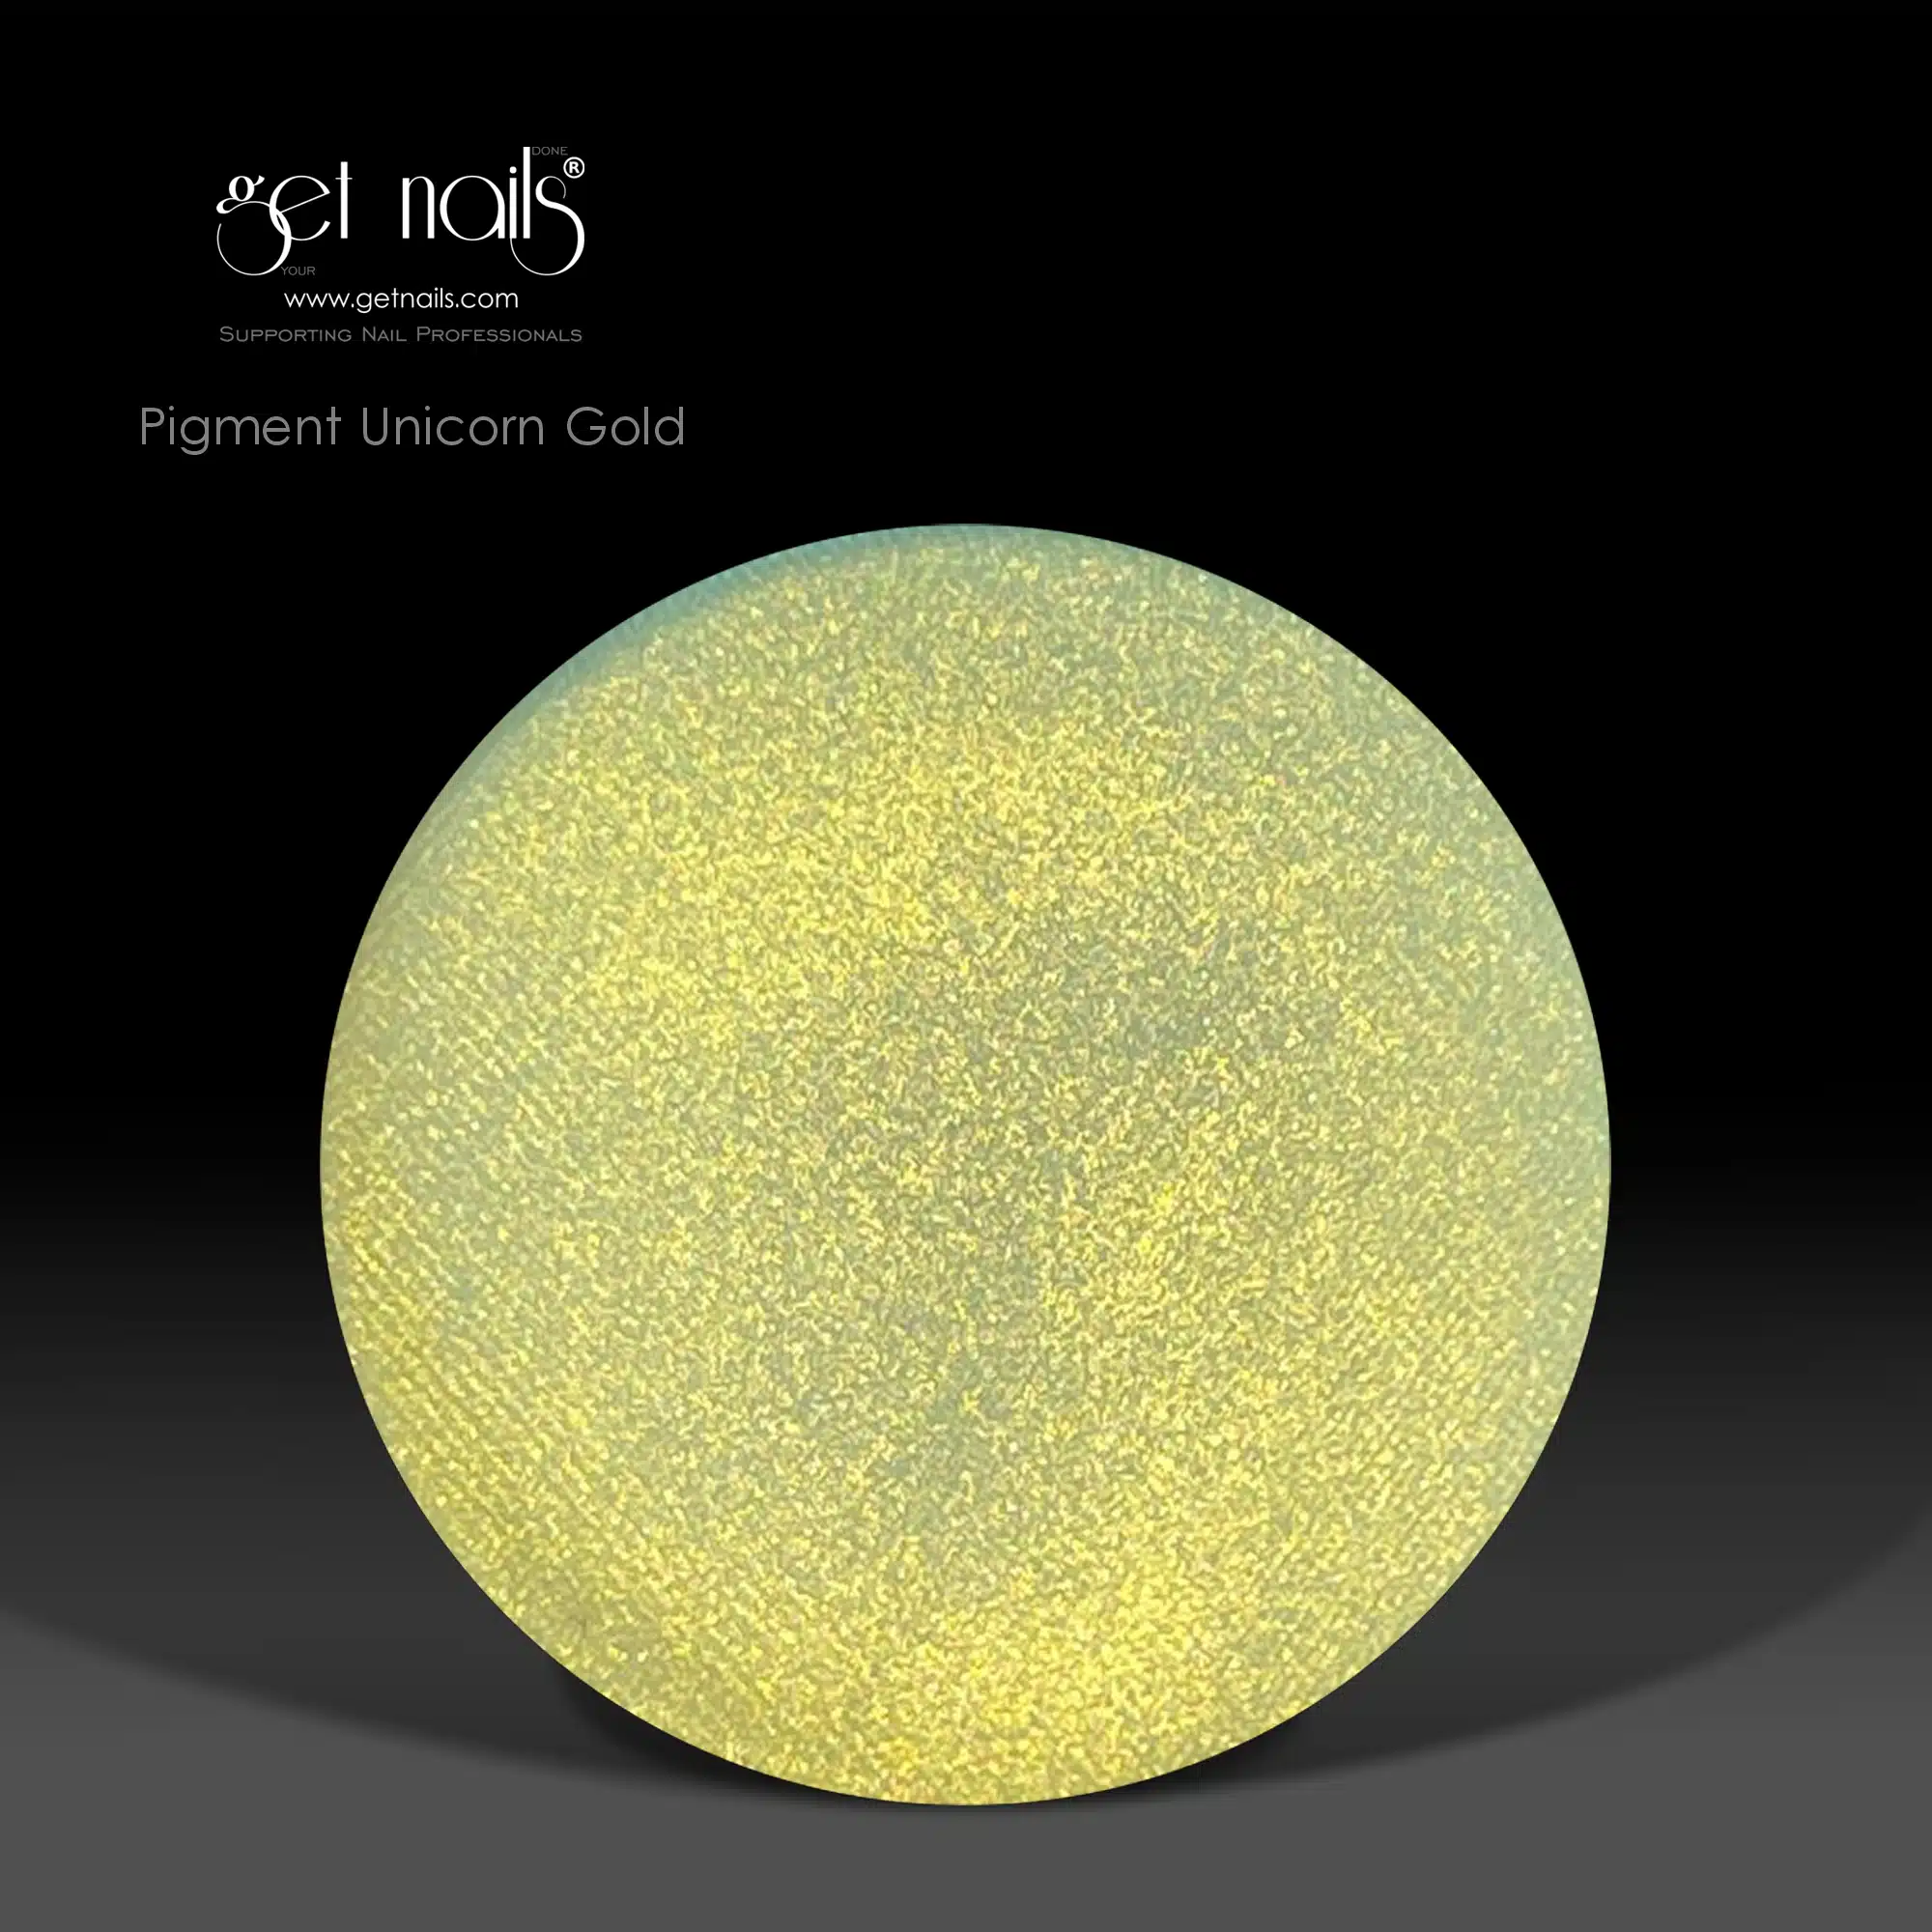 Get Nails Austria - Пигмент Unicorn Gold